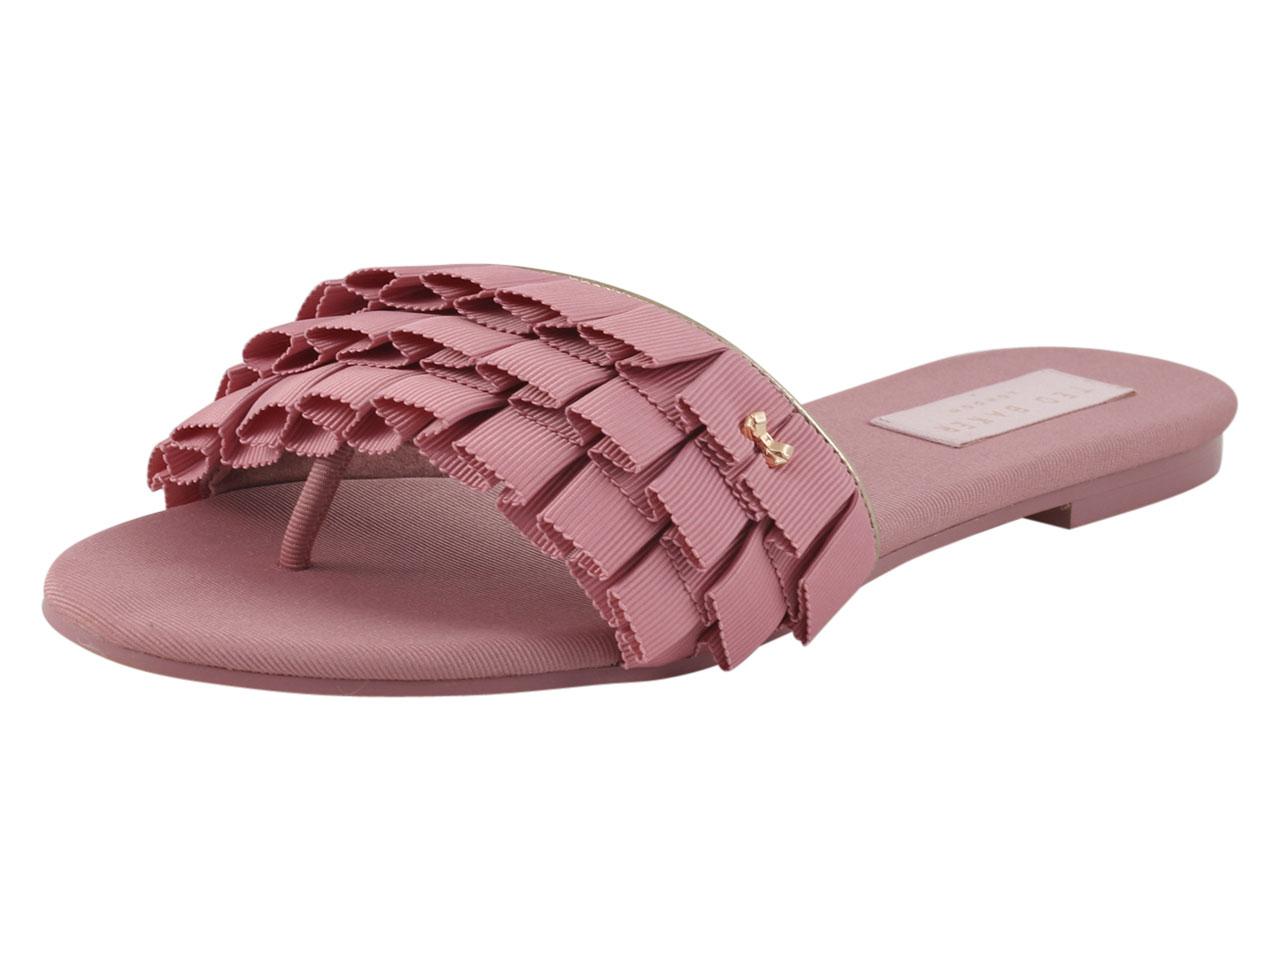 Ted Baker Women's Towdi Slide Sandals Shoes - Pink - 10 B(M) US